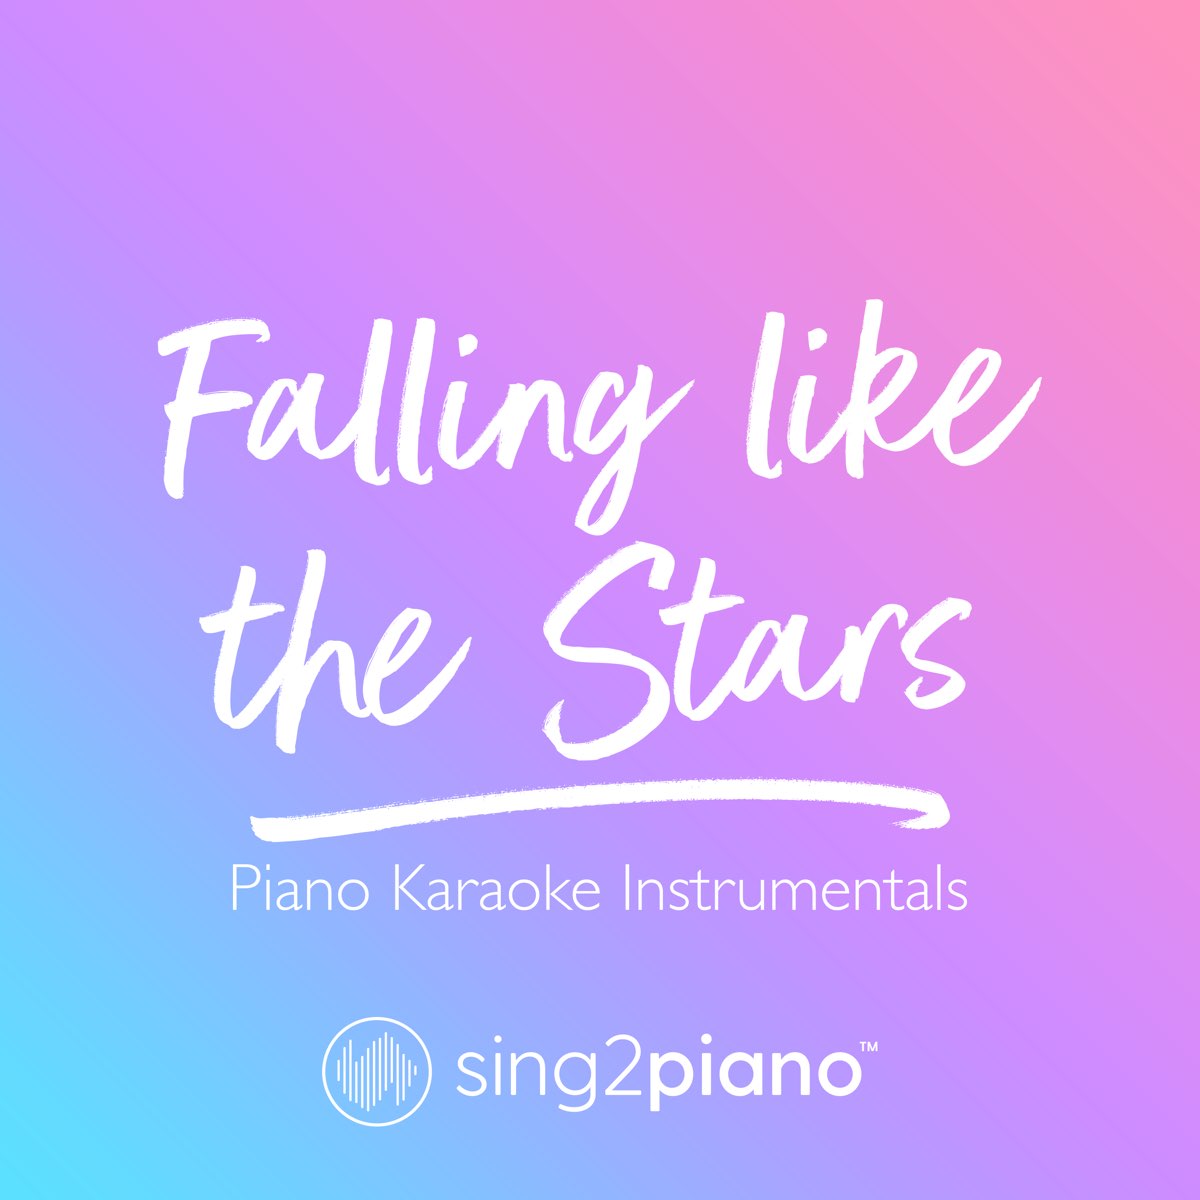 Falling Like the Stars (Piano Karaoke Instrumentals) - Single by Sing2Piano  on Apple Music